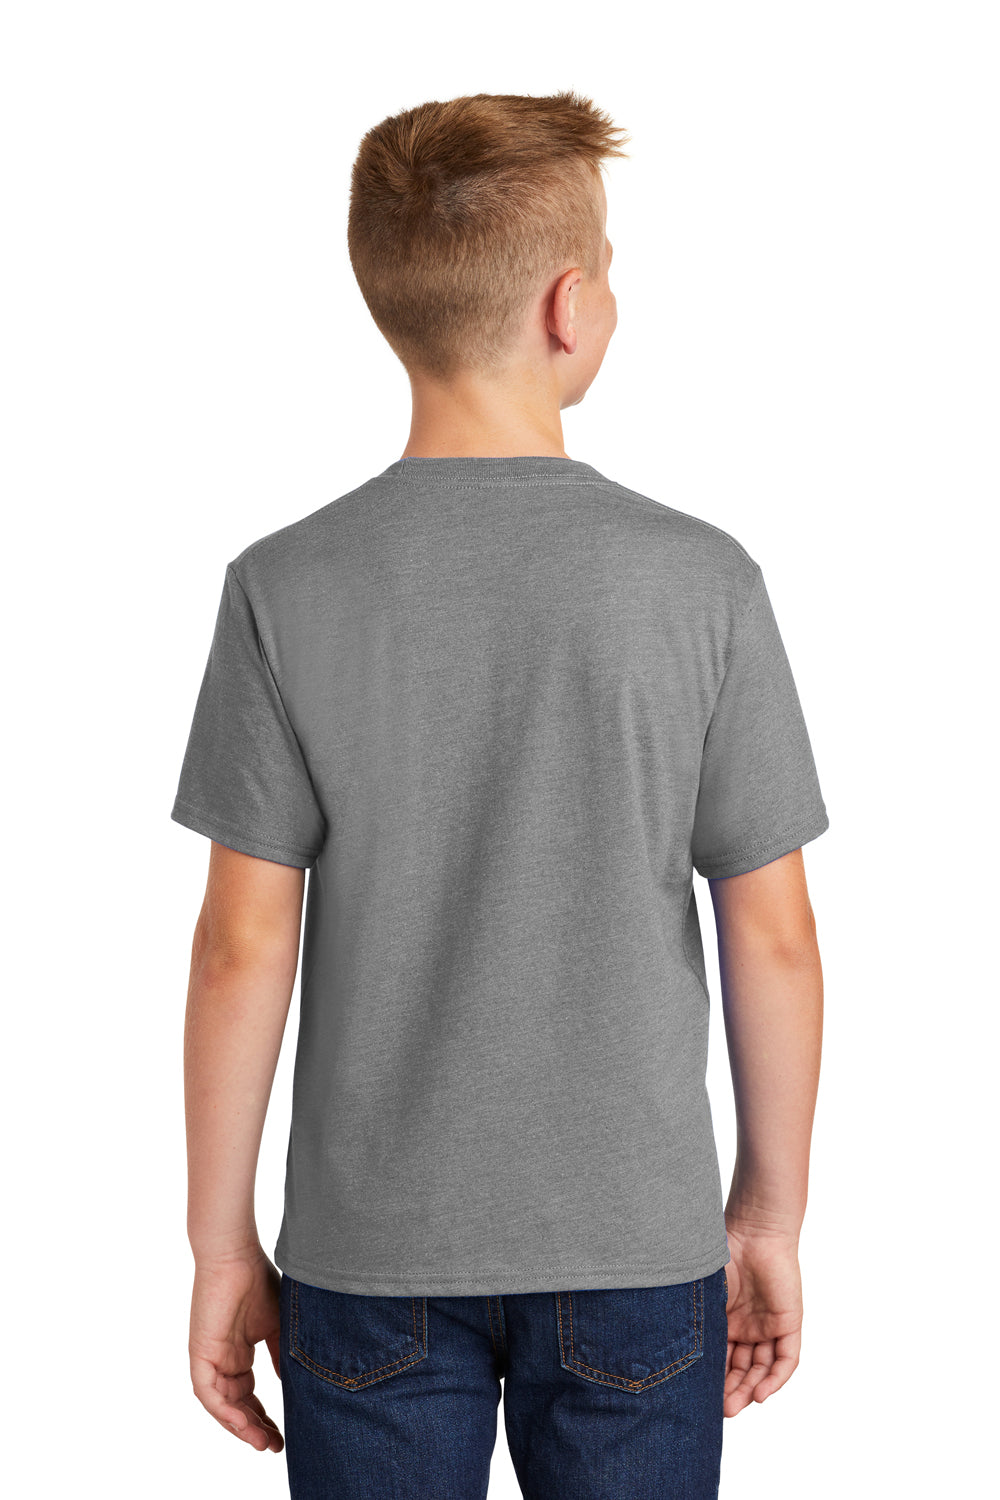 Port & Company PC455Y Youth Fan Favorite Short Sleeve Crewneck T-Shirt Heather Graphite Grey Back